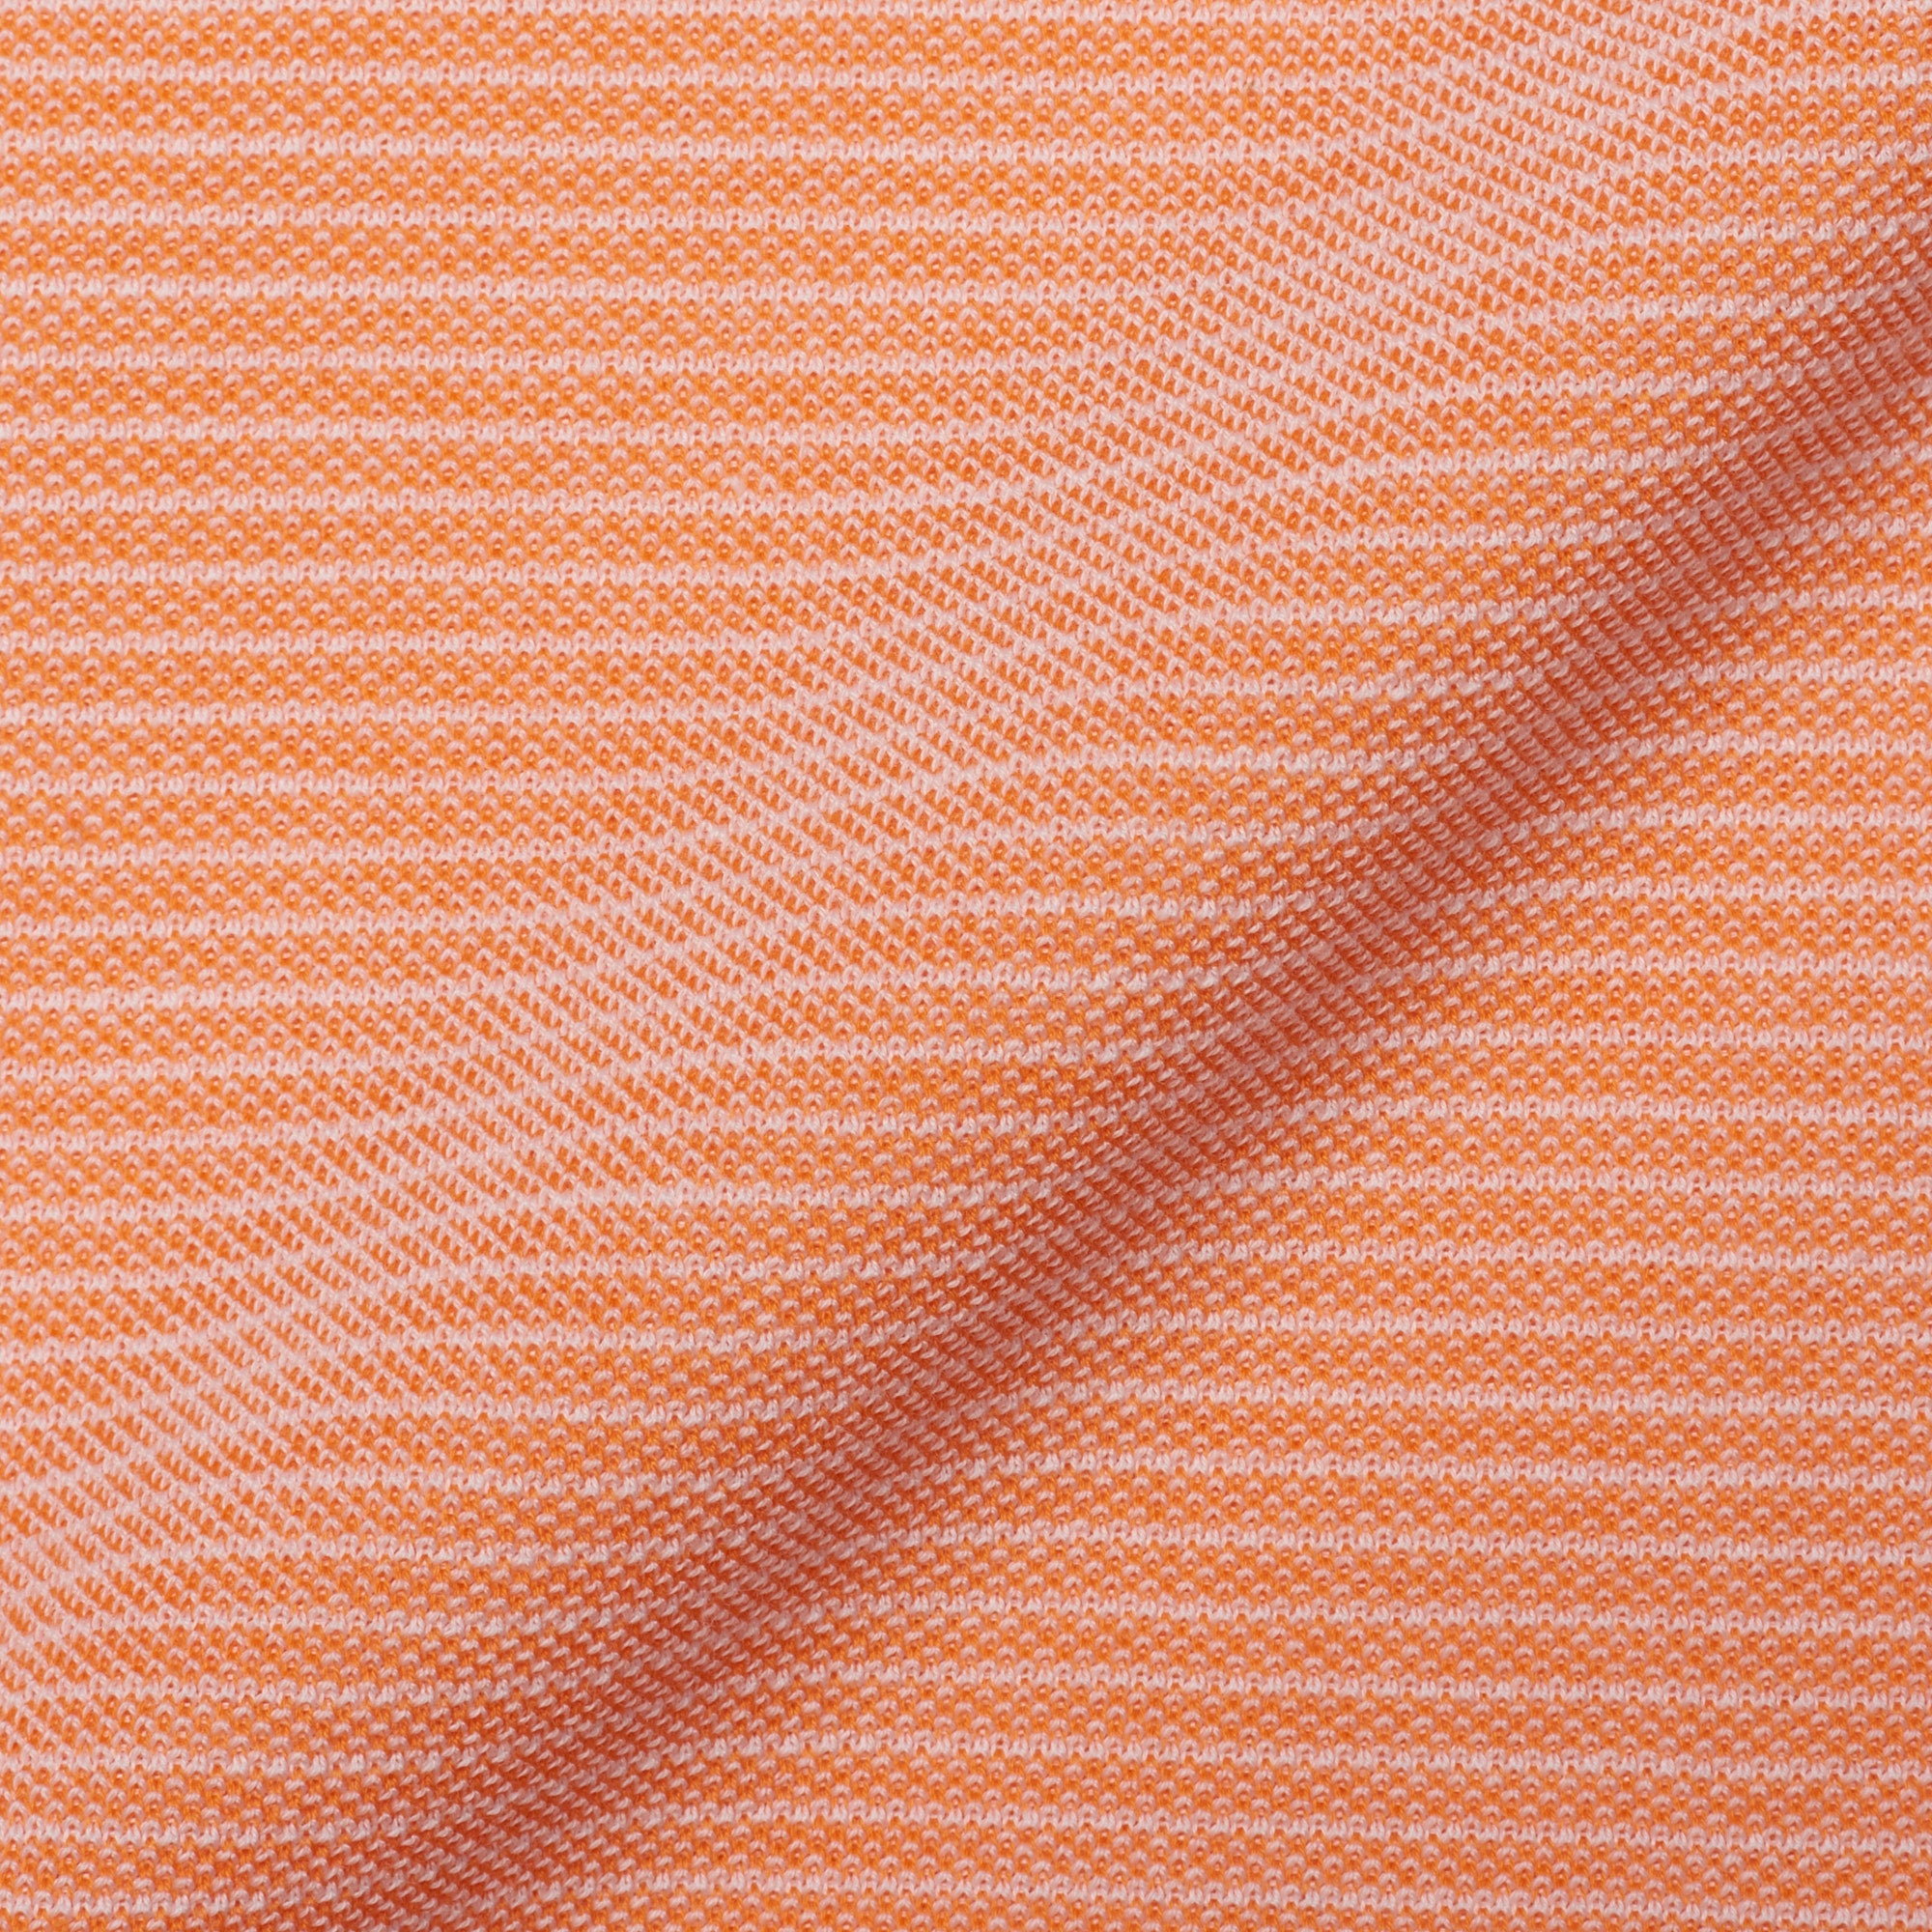 FEDELI Orange Striped Cotton Light Pique Long Sleeve Polo Shirt EU 50 NEW US M FEDELI